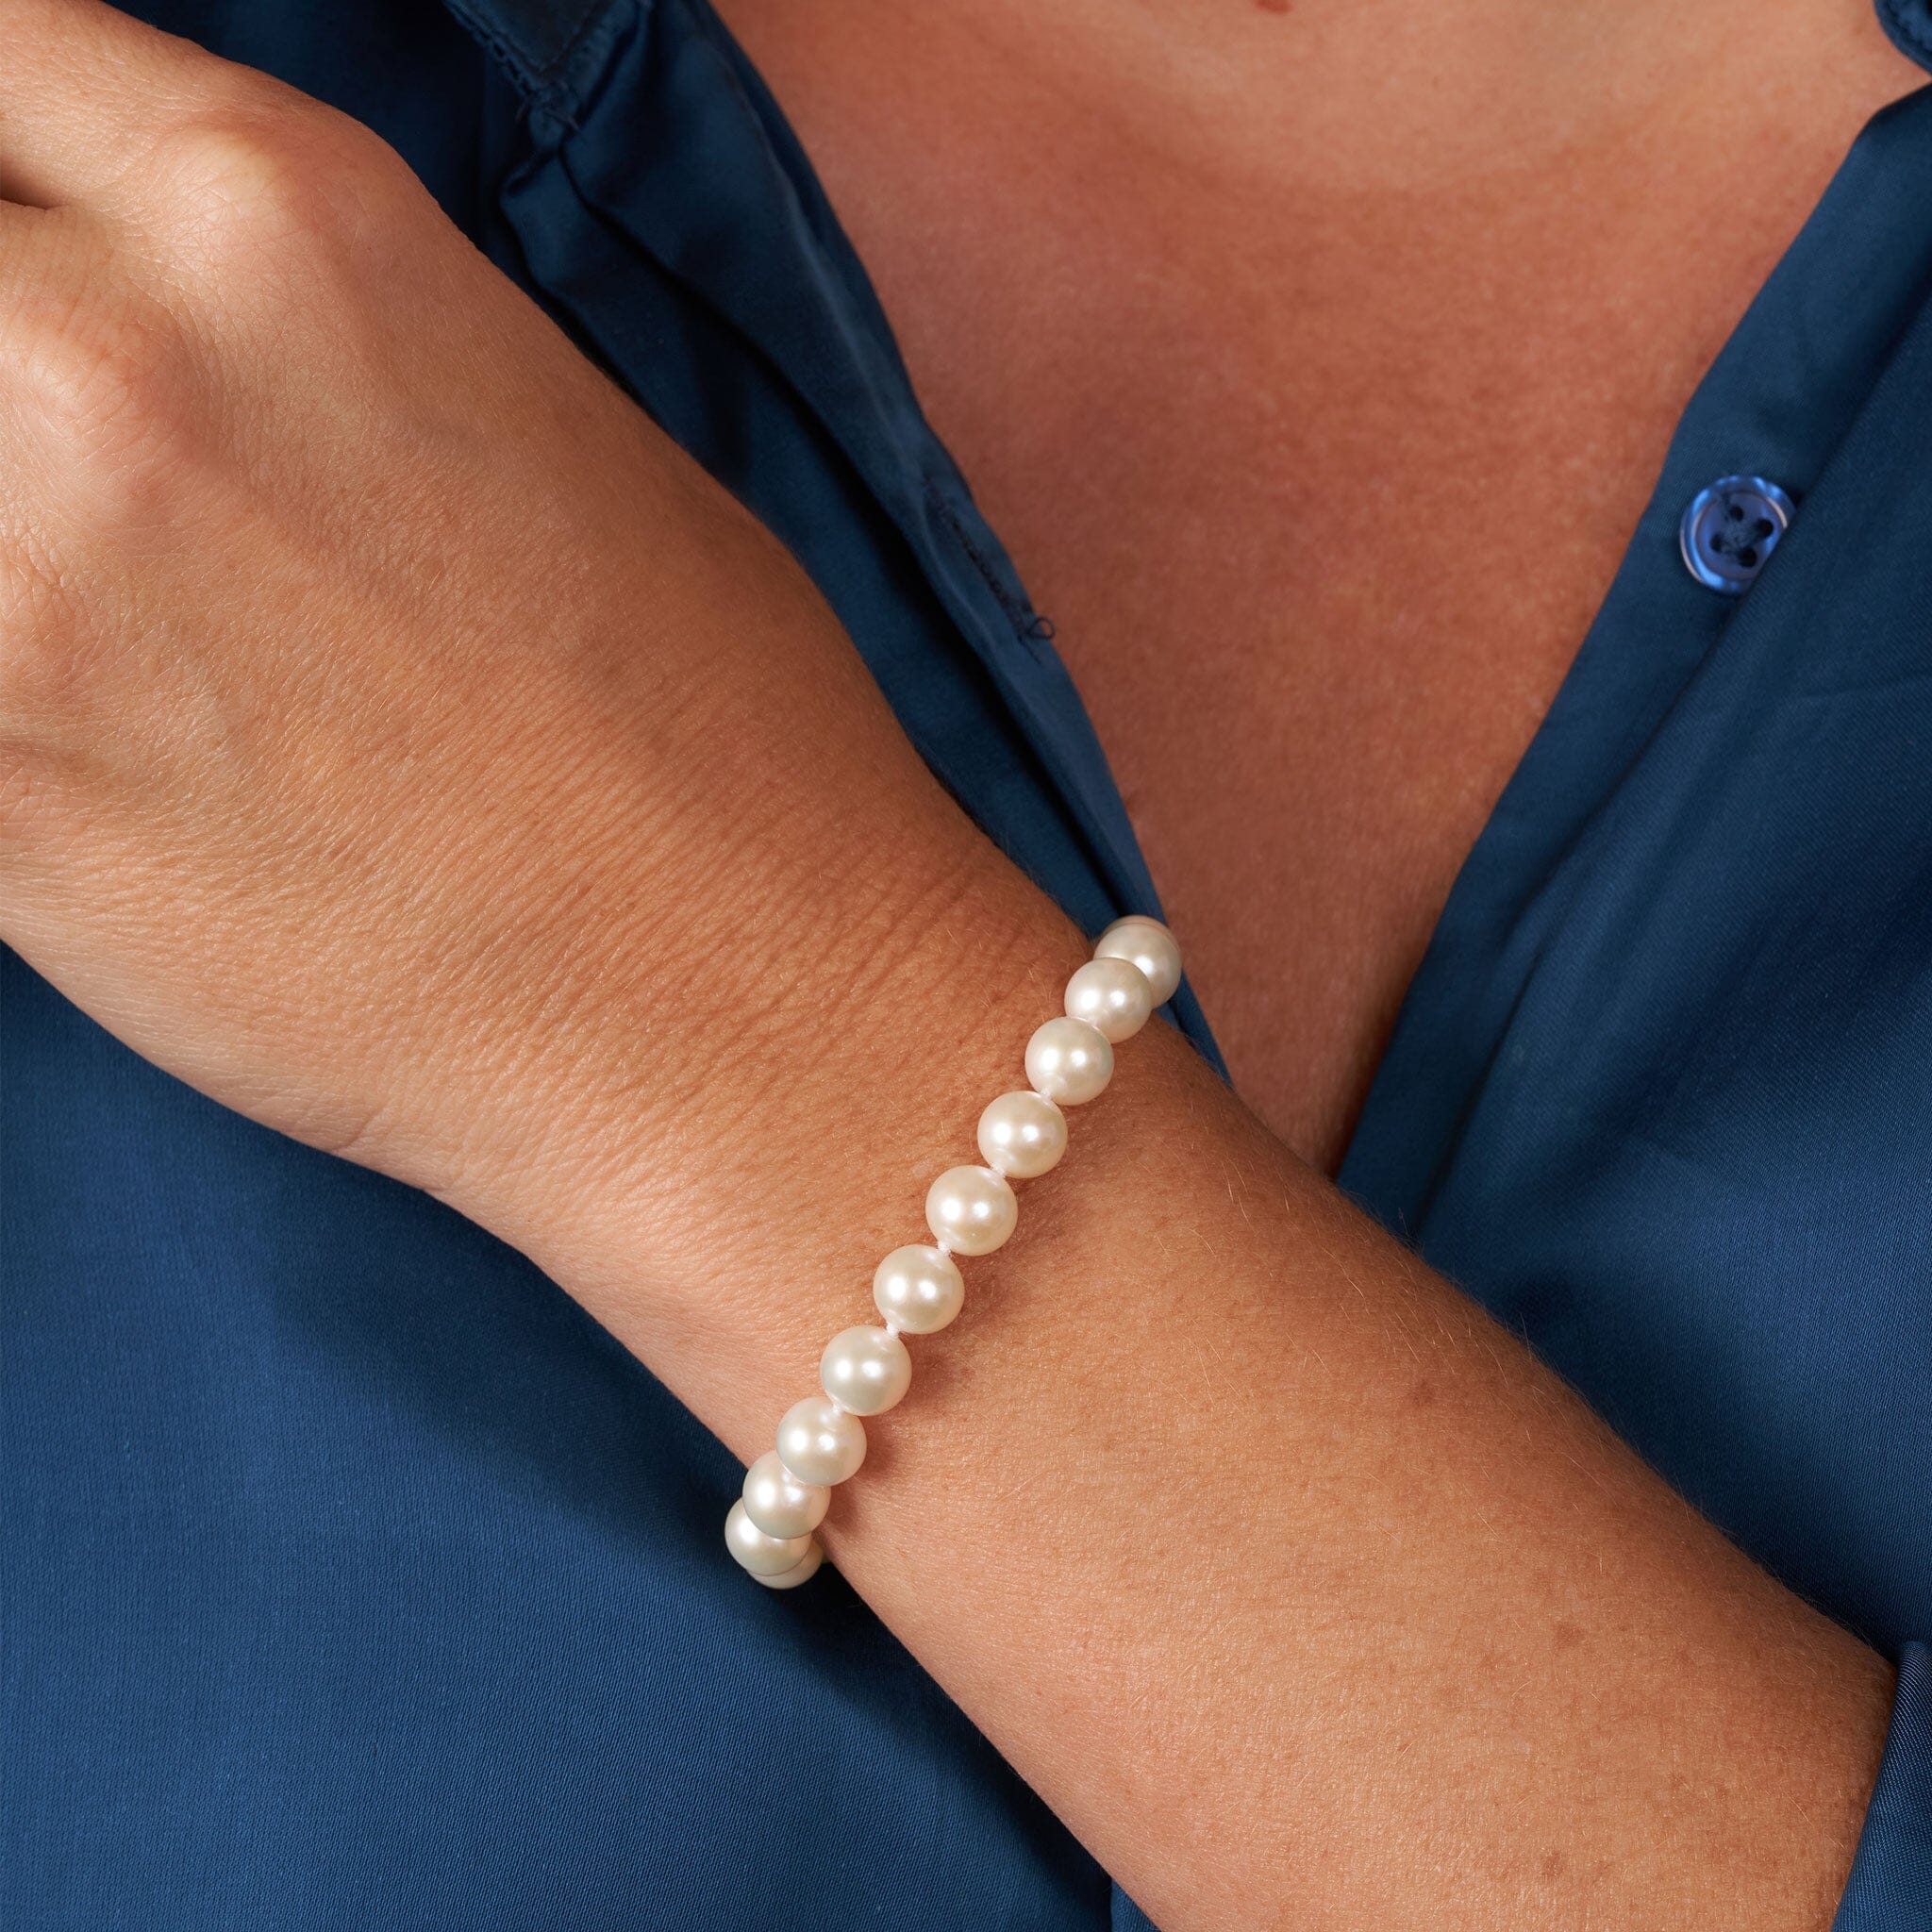 Freshwater Cultured Pearl Woven Bracelet in 14k White Gold (3-5mm)